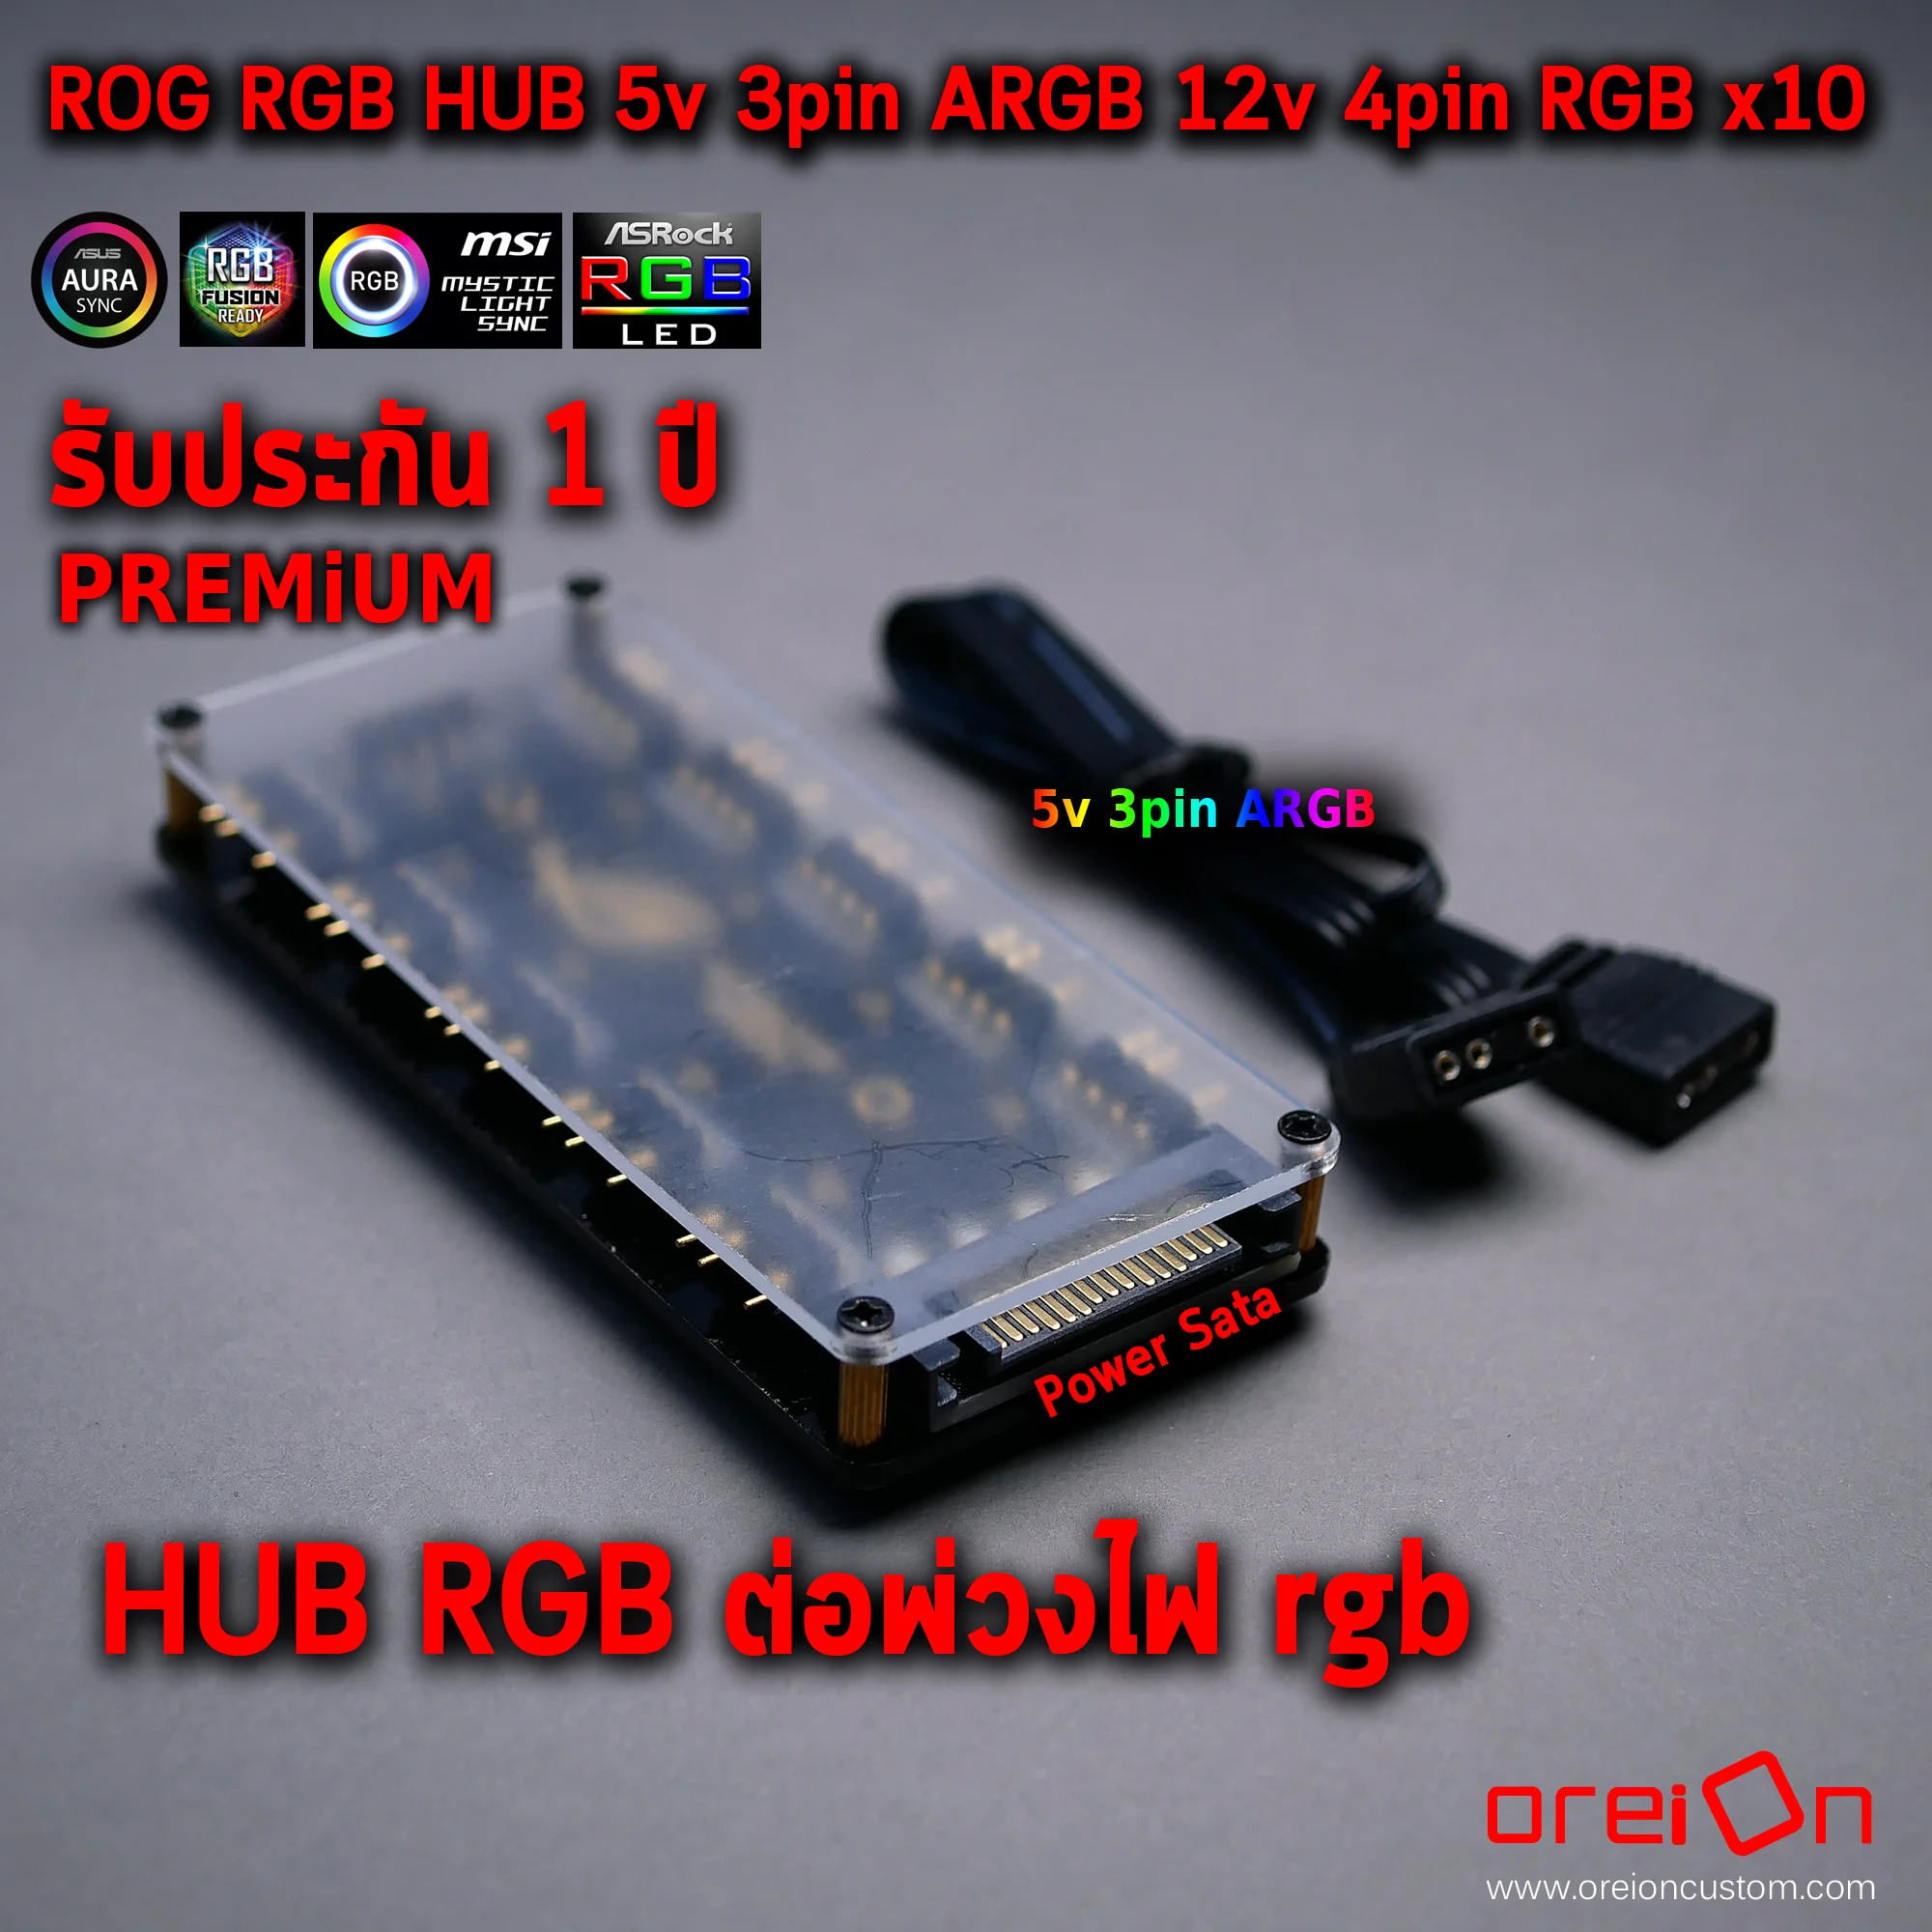 Splitter HUB RGB Hub ROG 3pin5v ARGB LED x10 With Cover power sata